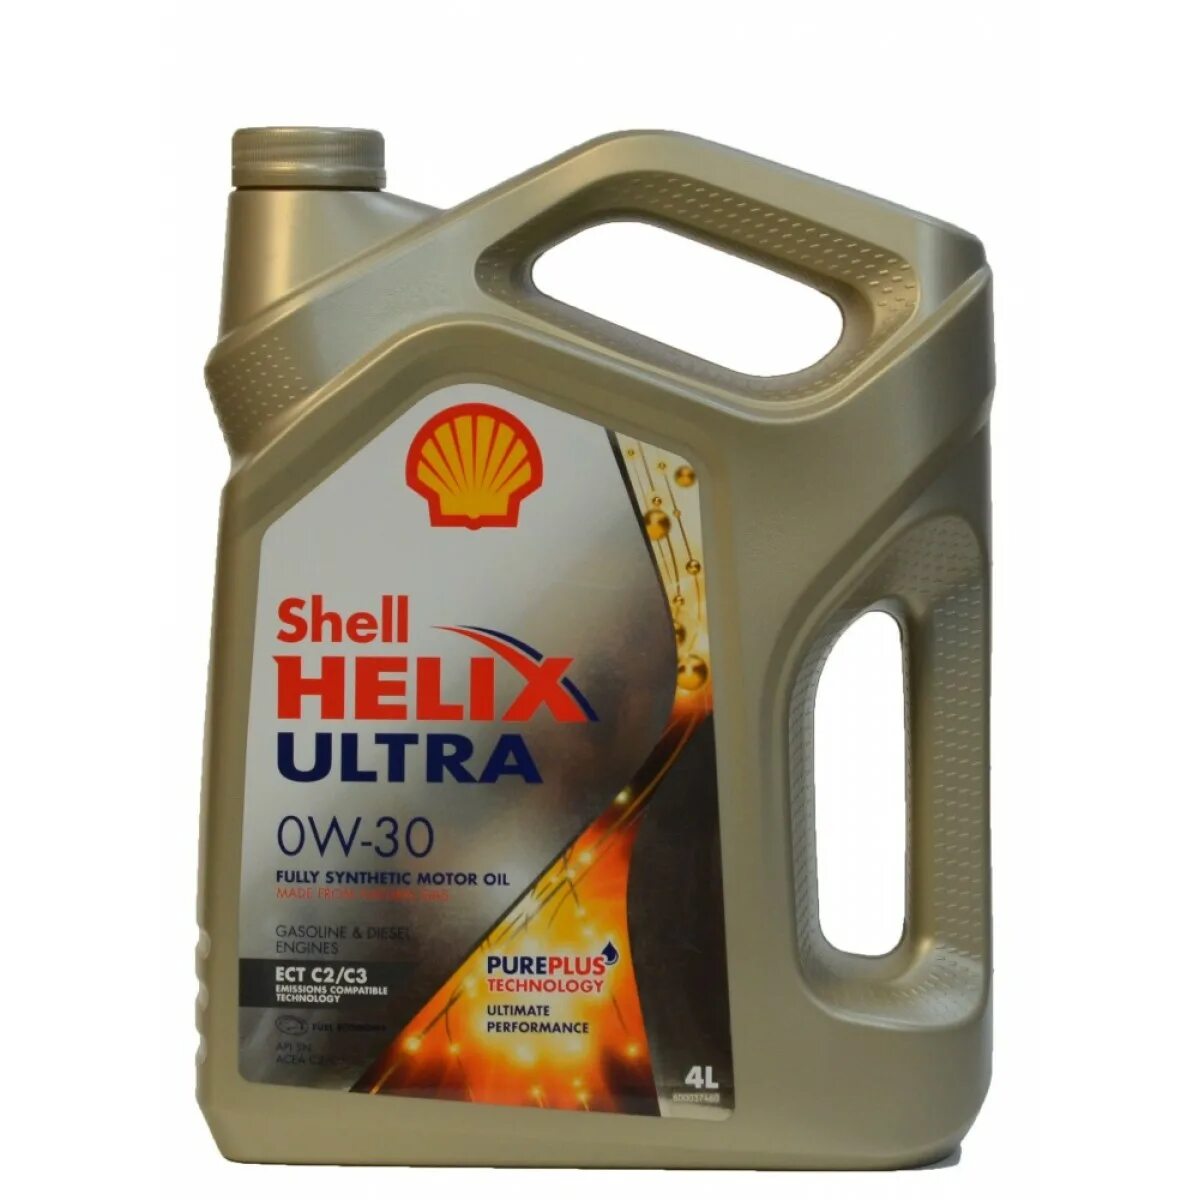 Shell моторные масла 5. Shell Helix Ultra 0w30. Шелл Хеликс 0w30. Масло Шелл Хеликс ультра 0w30. Масло моторное Шелл Хеликс ультра 0w30 упаковка.